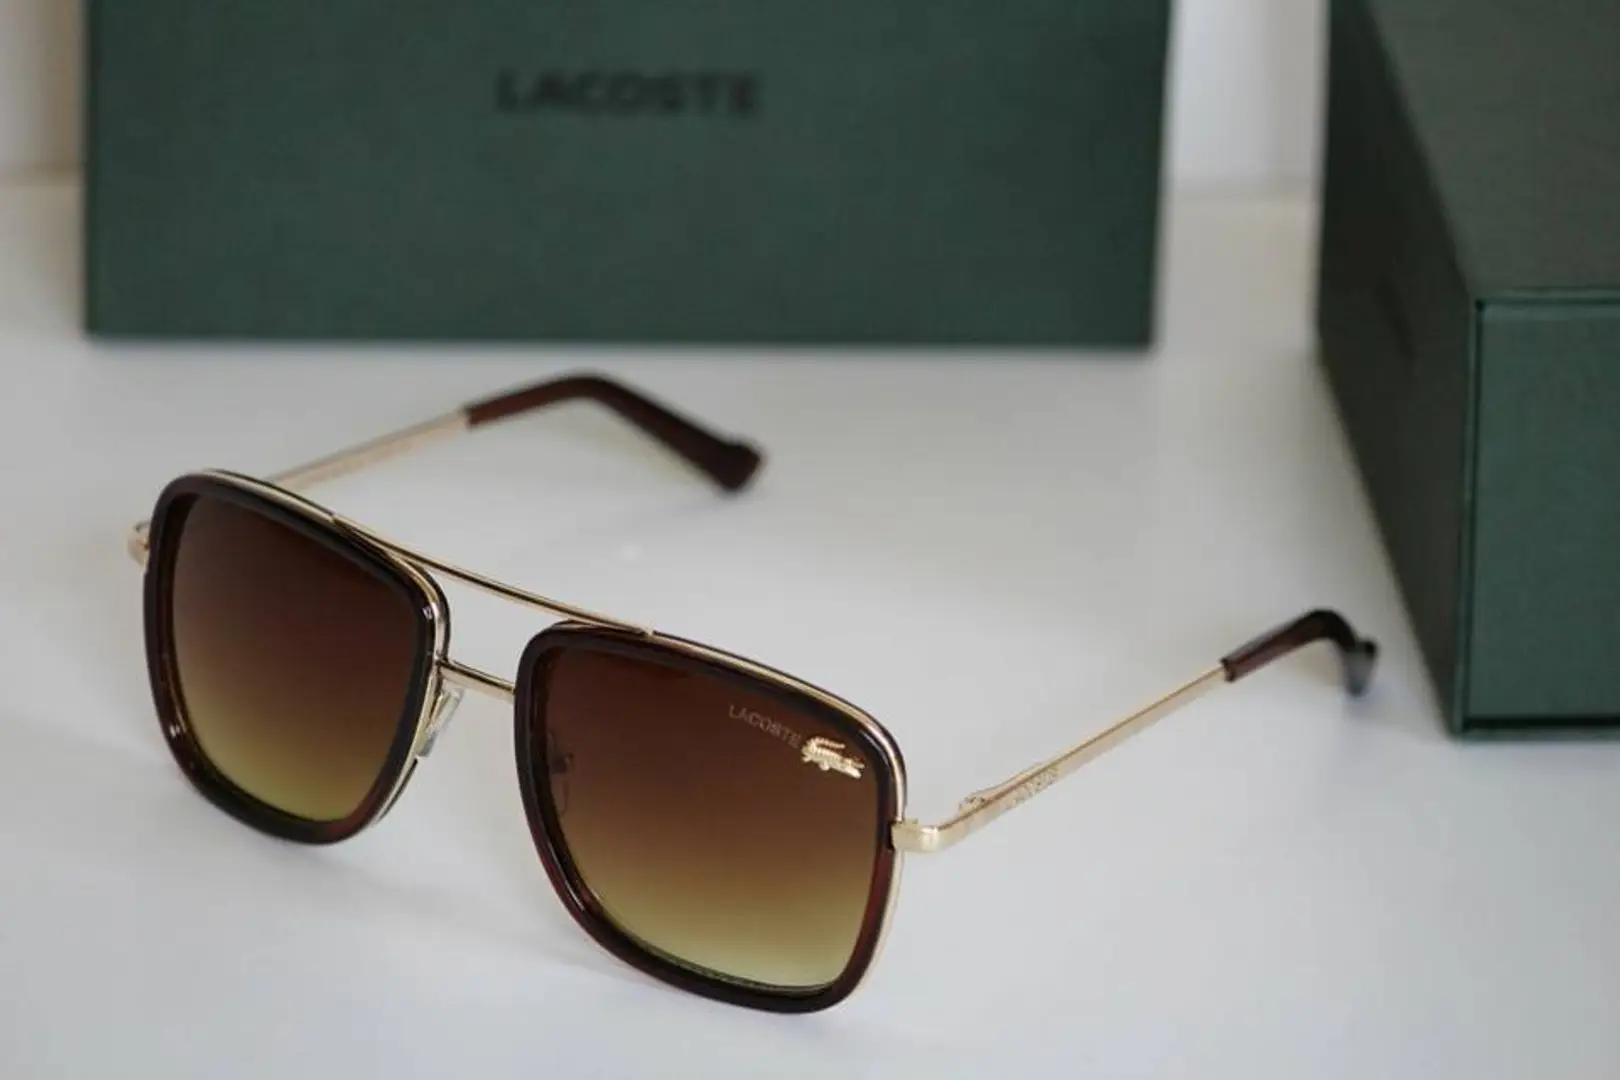 price of lacoste sunglasses